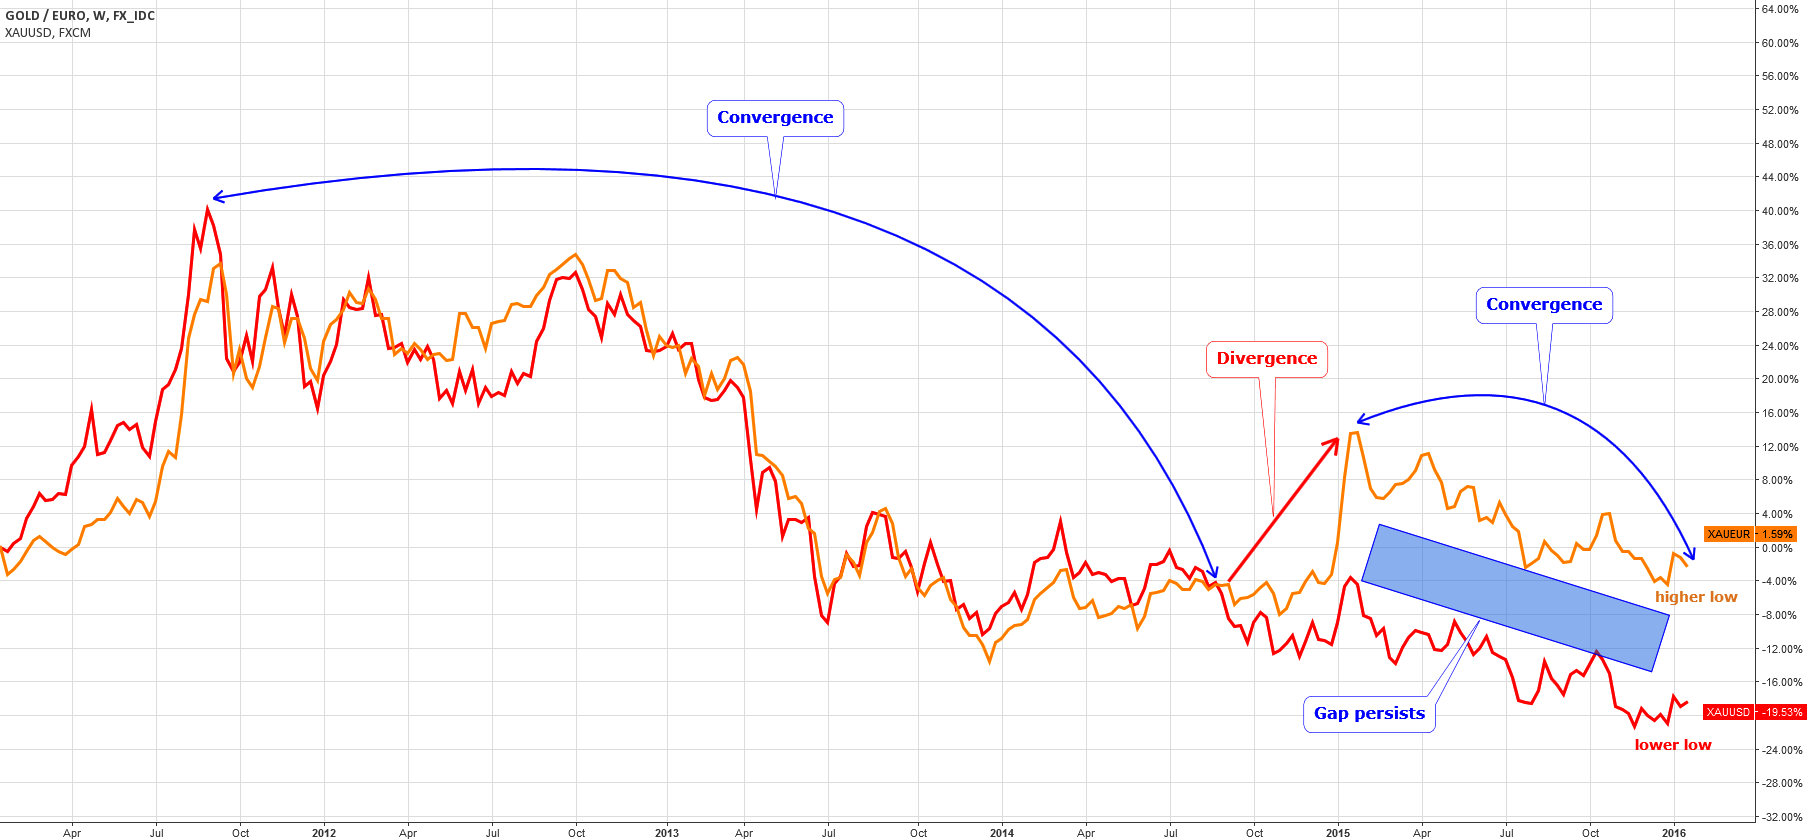 5-year Comparative Dynamics: Gold/Dollar Vs. Gold/Euro